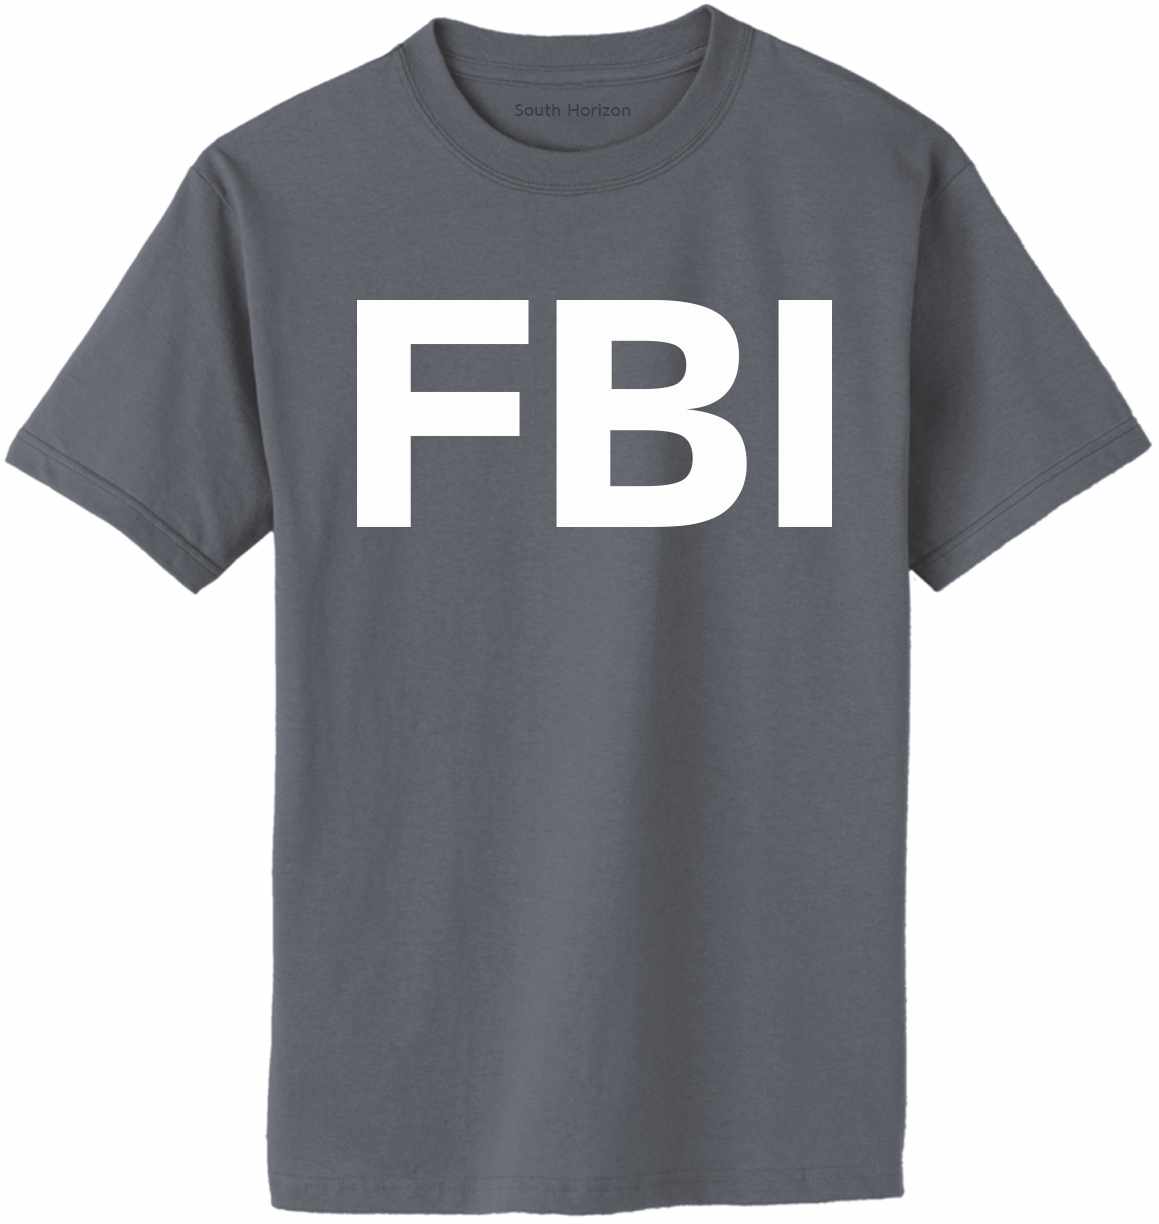 FBI Adult T-Shirt (#402-1)